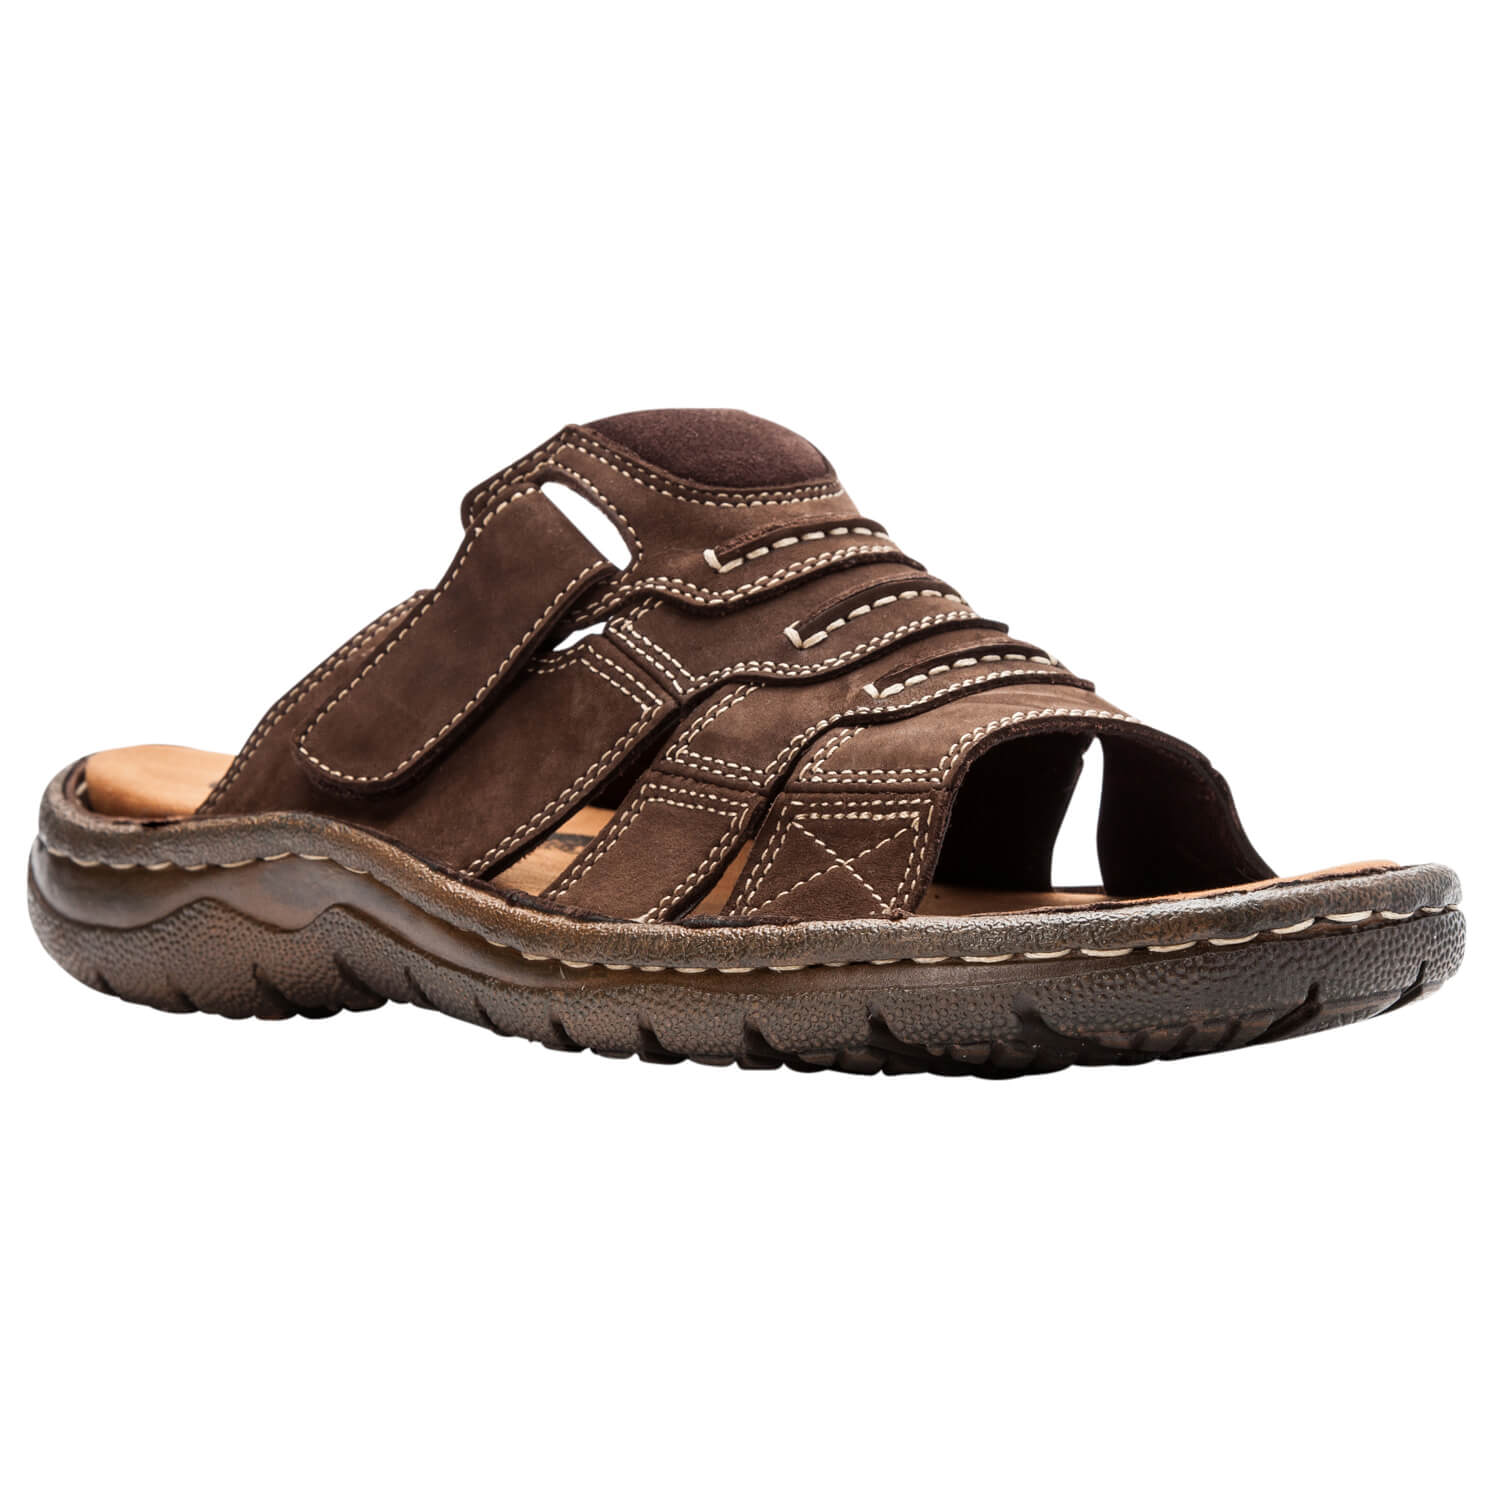 Propet Jace MSO001L Men's Sandal - Comfort Casual Sandal - Extra Depth For Removable Footbed - Extra Wide